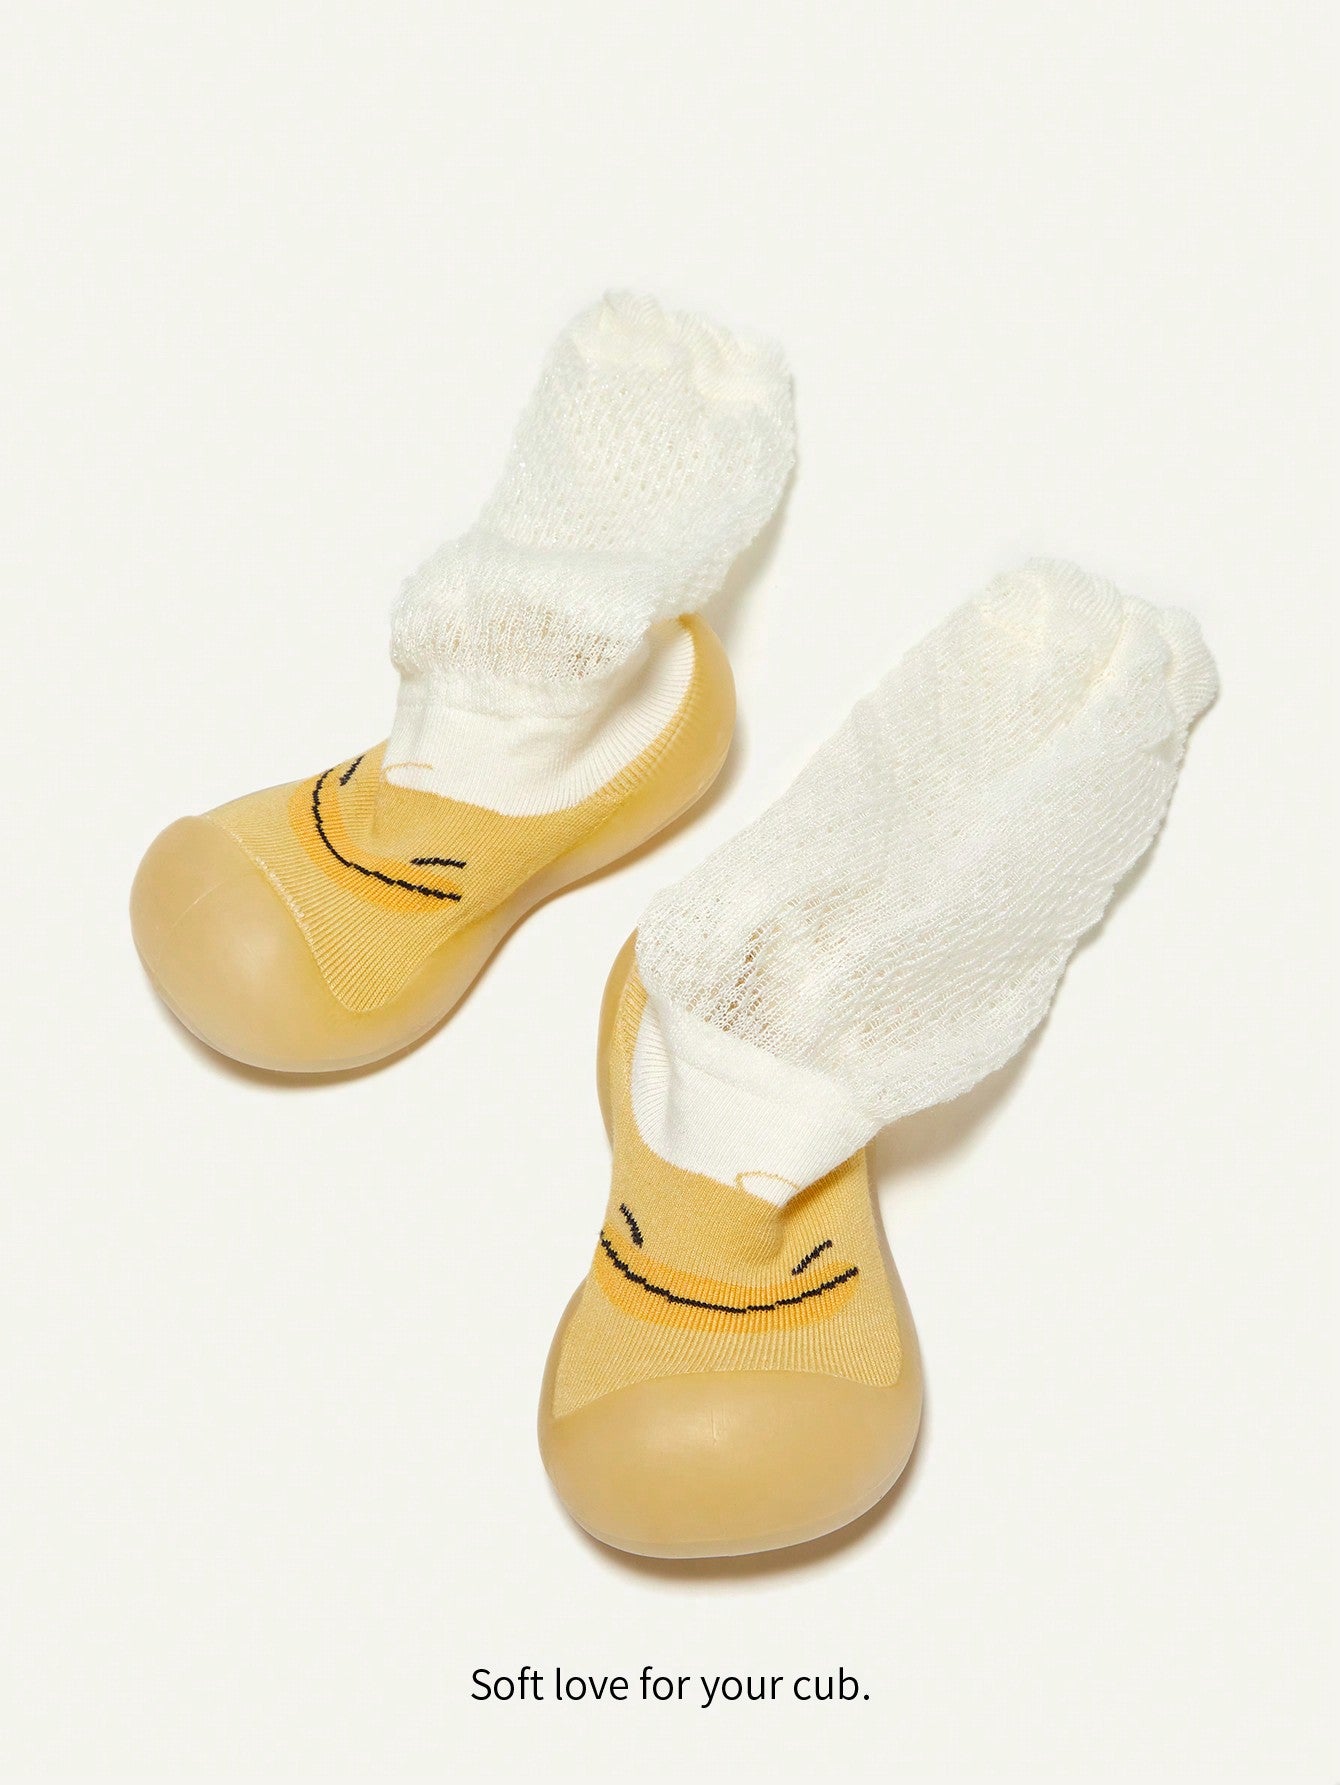 Fashionable And Fun Animal Design Baby Anti-slip Sports Socks With Shoe Look